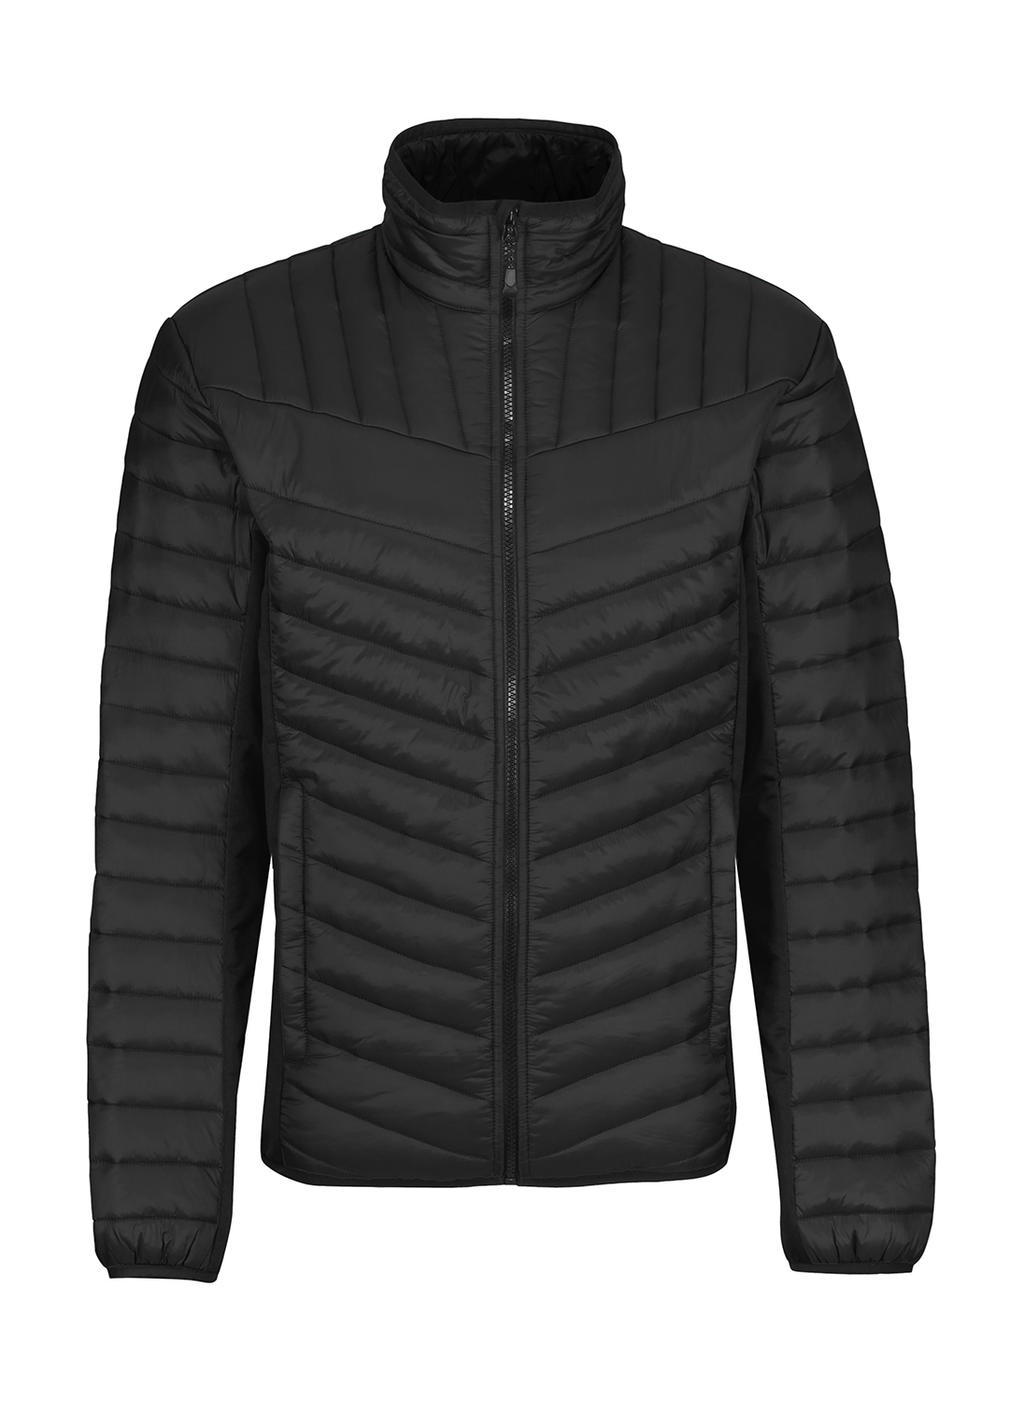  Tourer Hybrid Jacket in Farbe Black